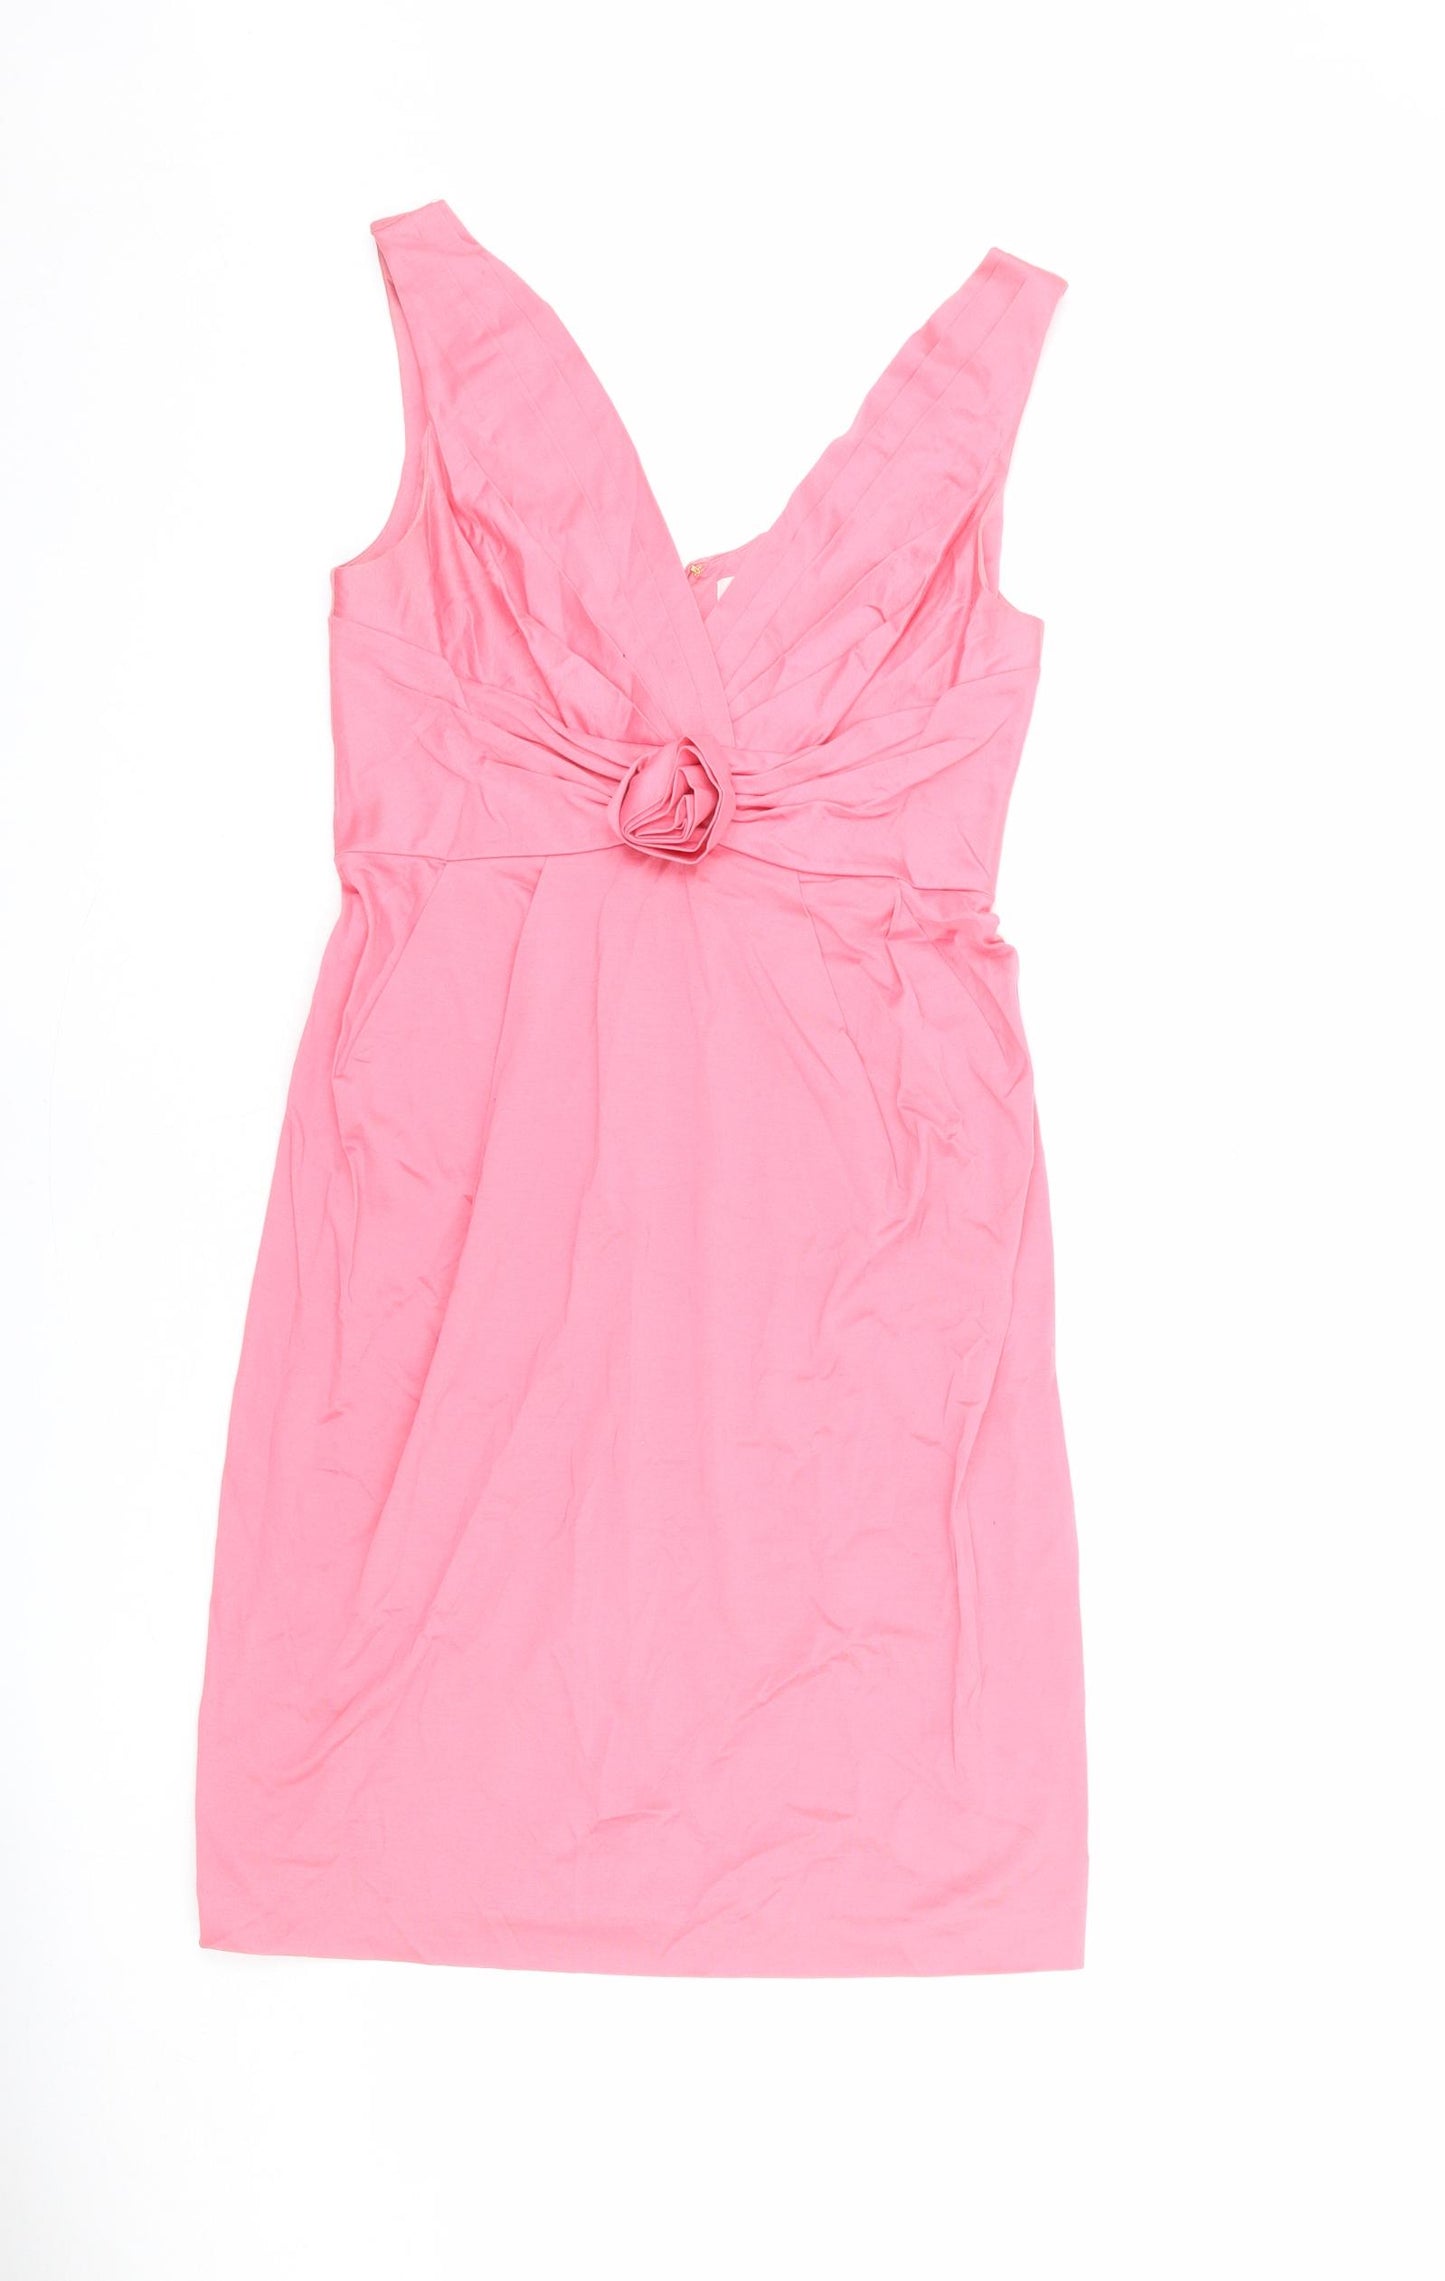 Full Circle Womens Pink 100% Cotton Pencil Dress Size 10 V-Neck Zip - Flower Detail